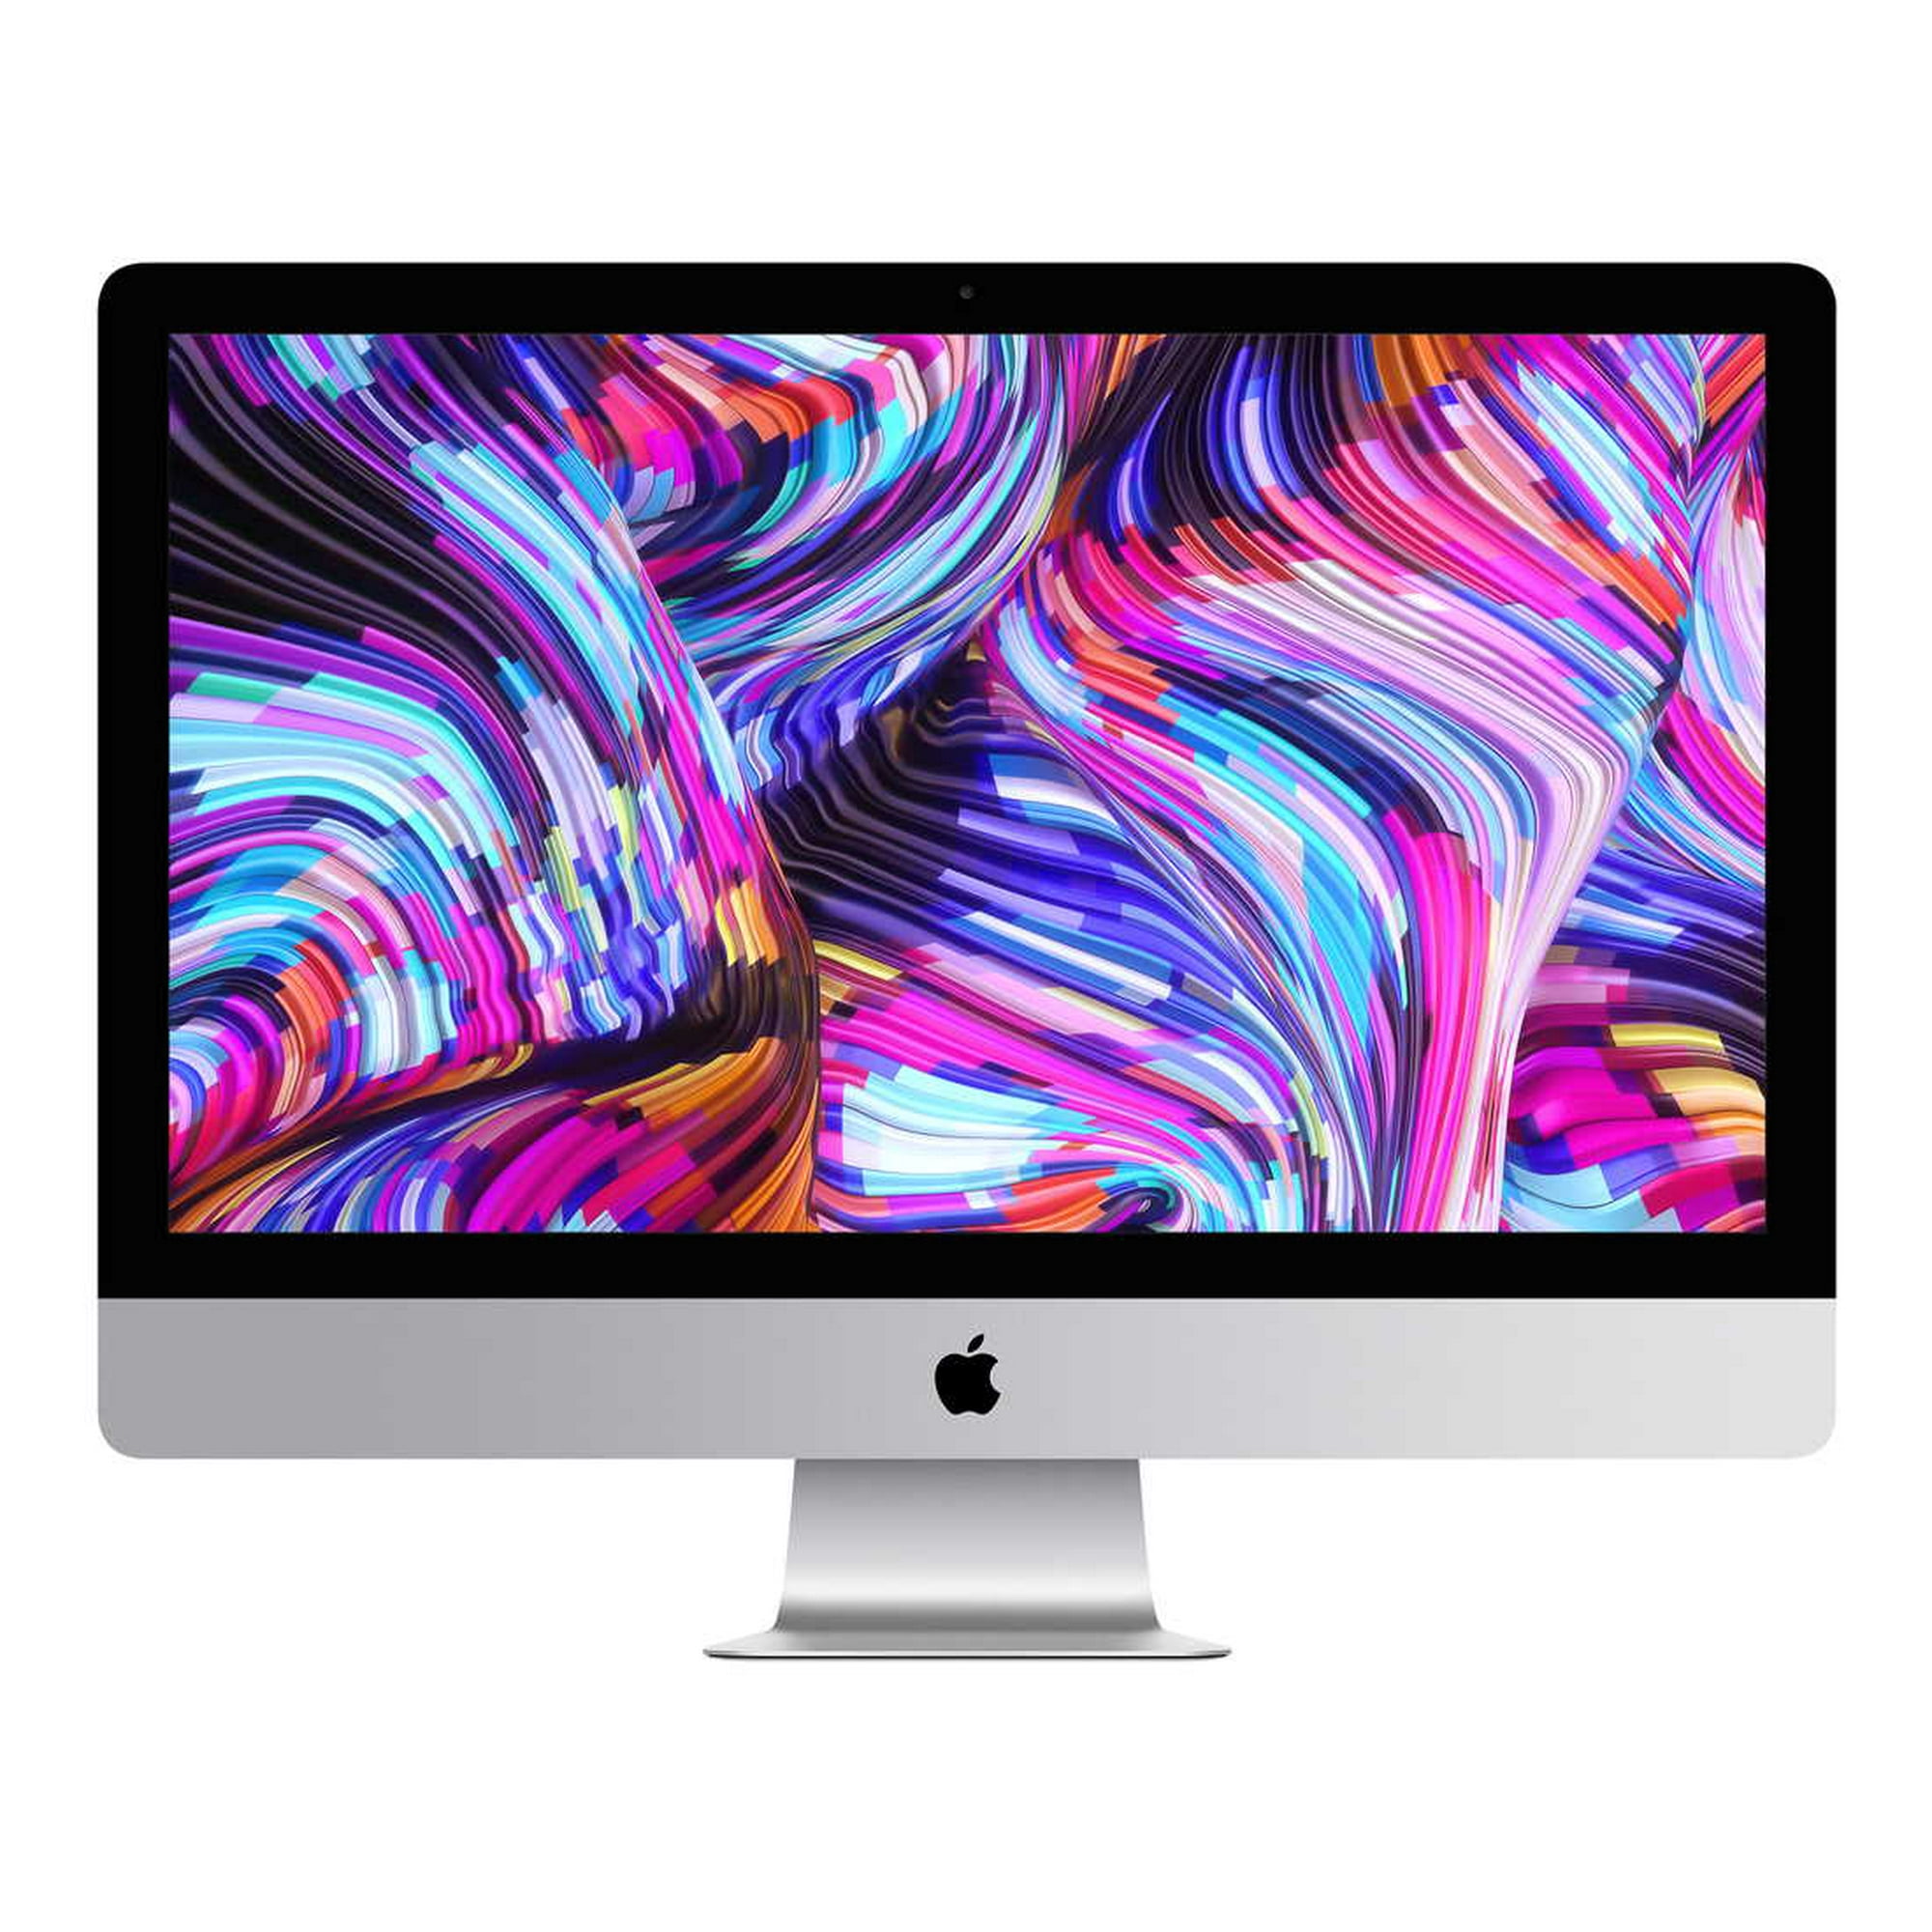 Apple A Grade Desktop Computer 27-inch iMac A1419 2017 MNE92LL/A